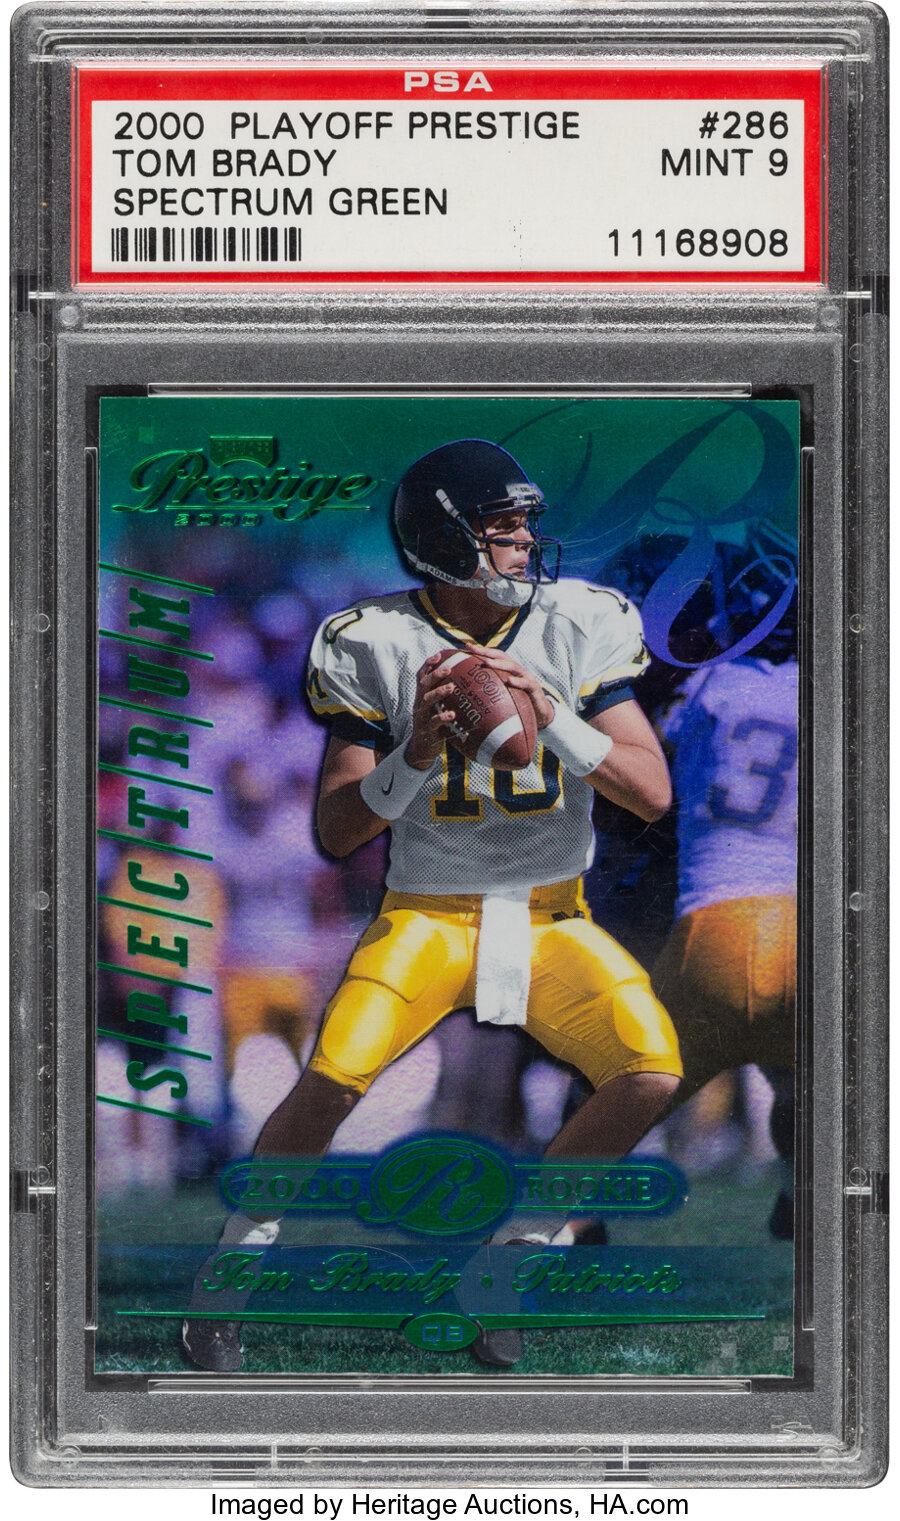 2000 Playoff Prestige Tom Brady (Spectrum Green) #286 PSA Mint 9 - #'d 13/25